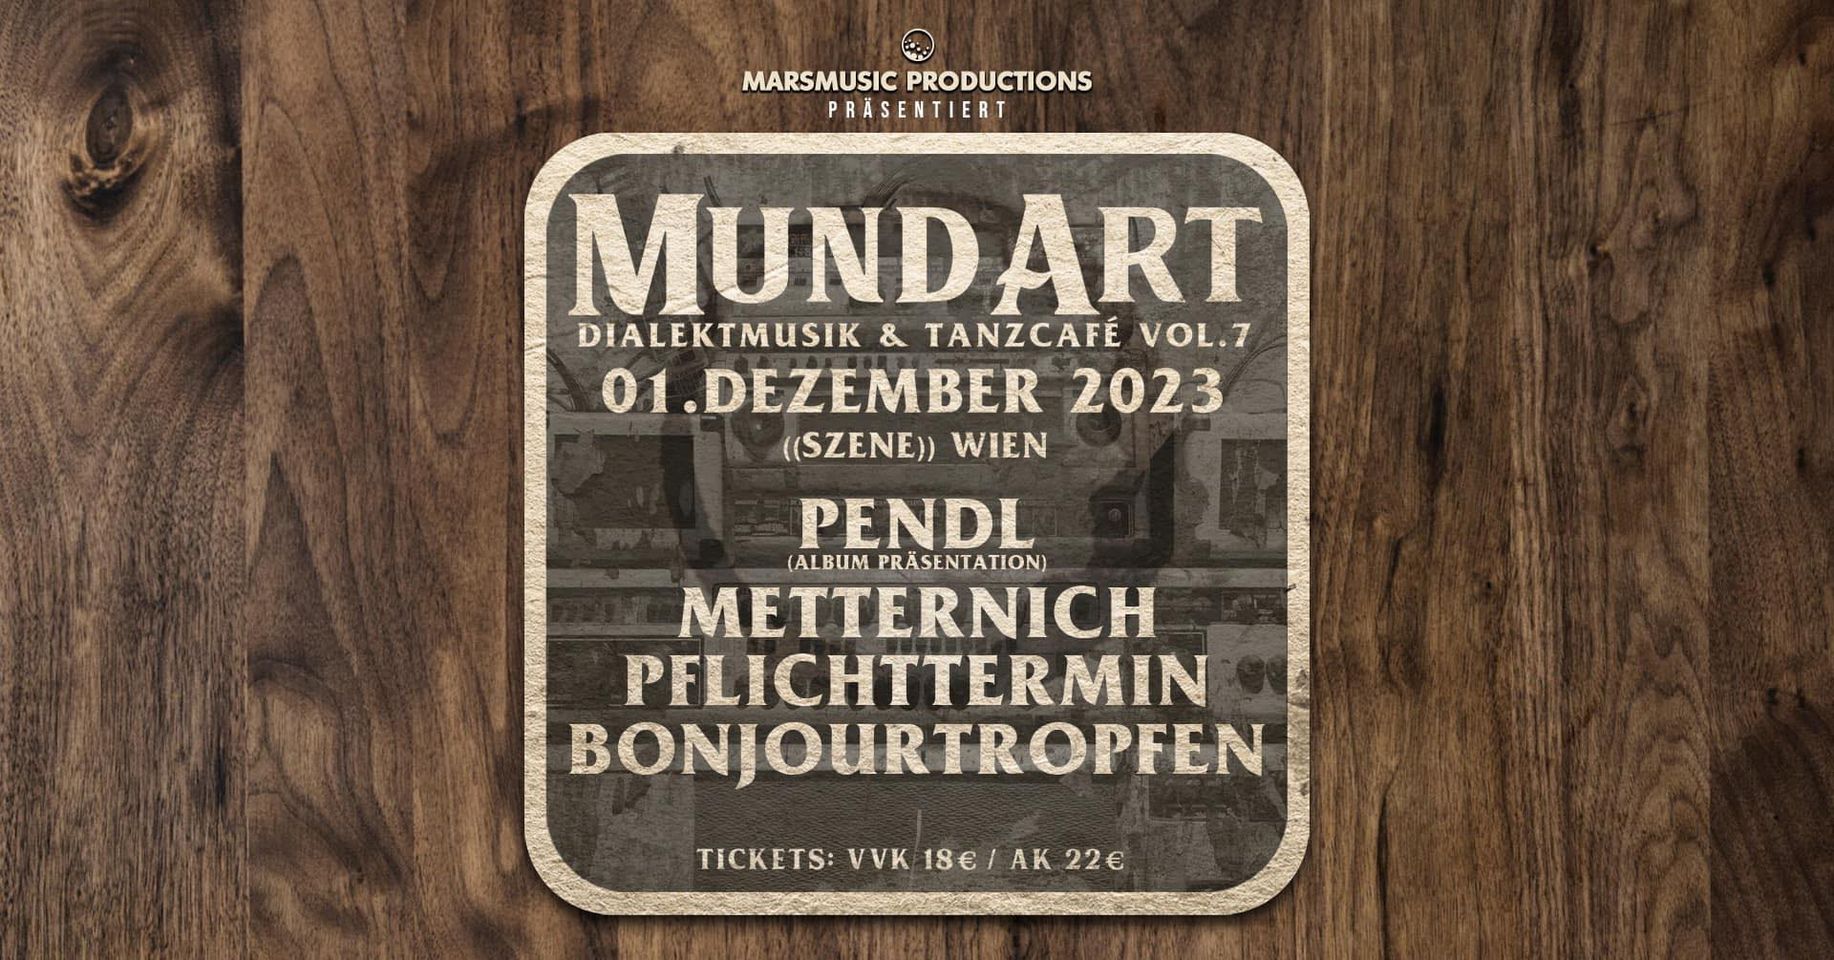 mundart – dialektmusik & tanzcafé vol.7 am 1. December 2023 @ Szene Wien.